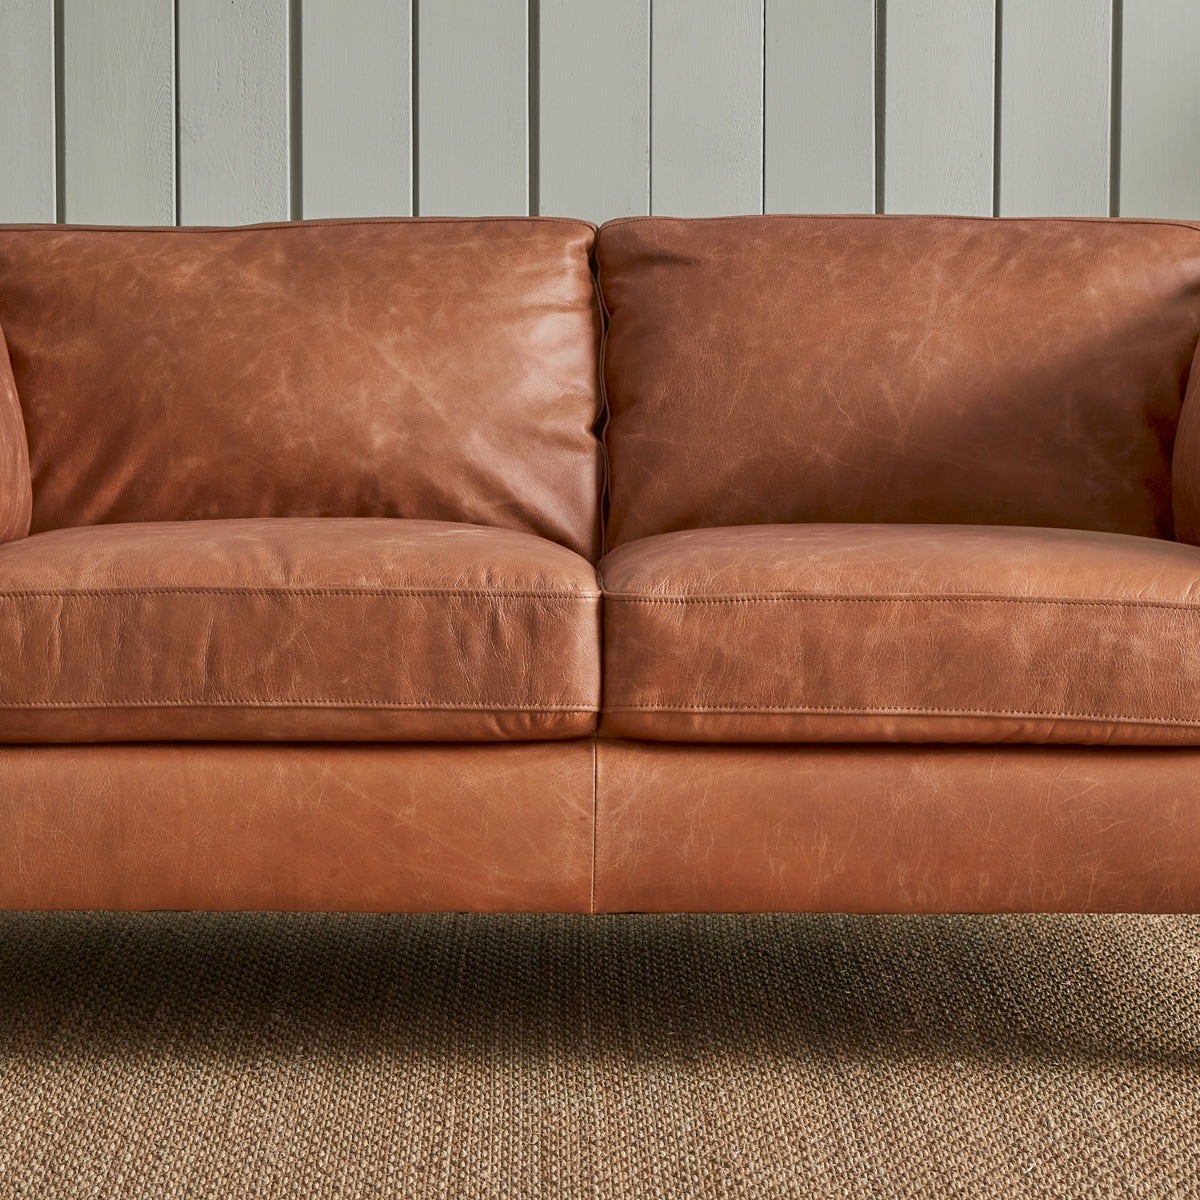 Harden Tan Leather Sofa